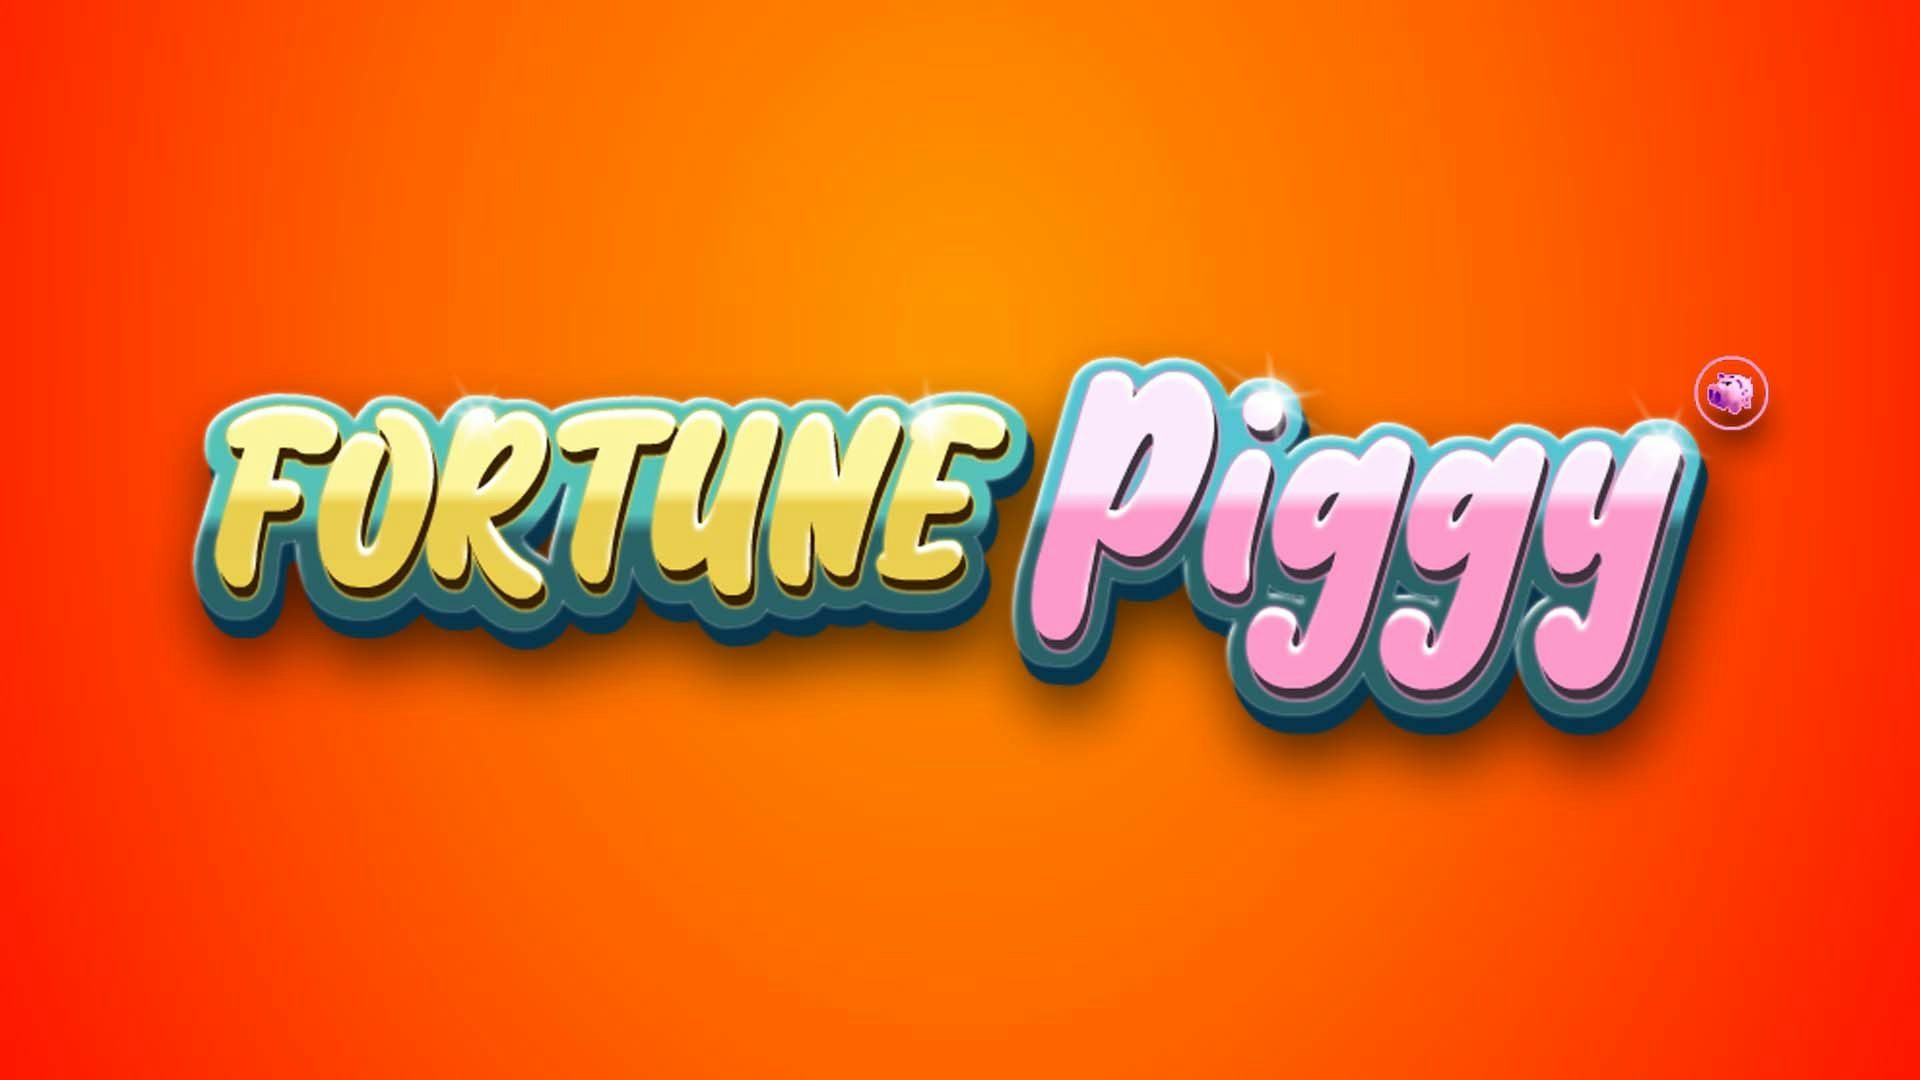 Fortune Piggy